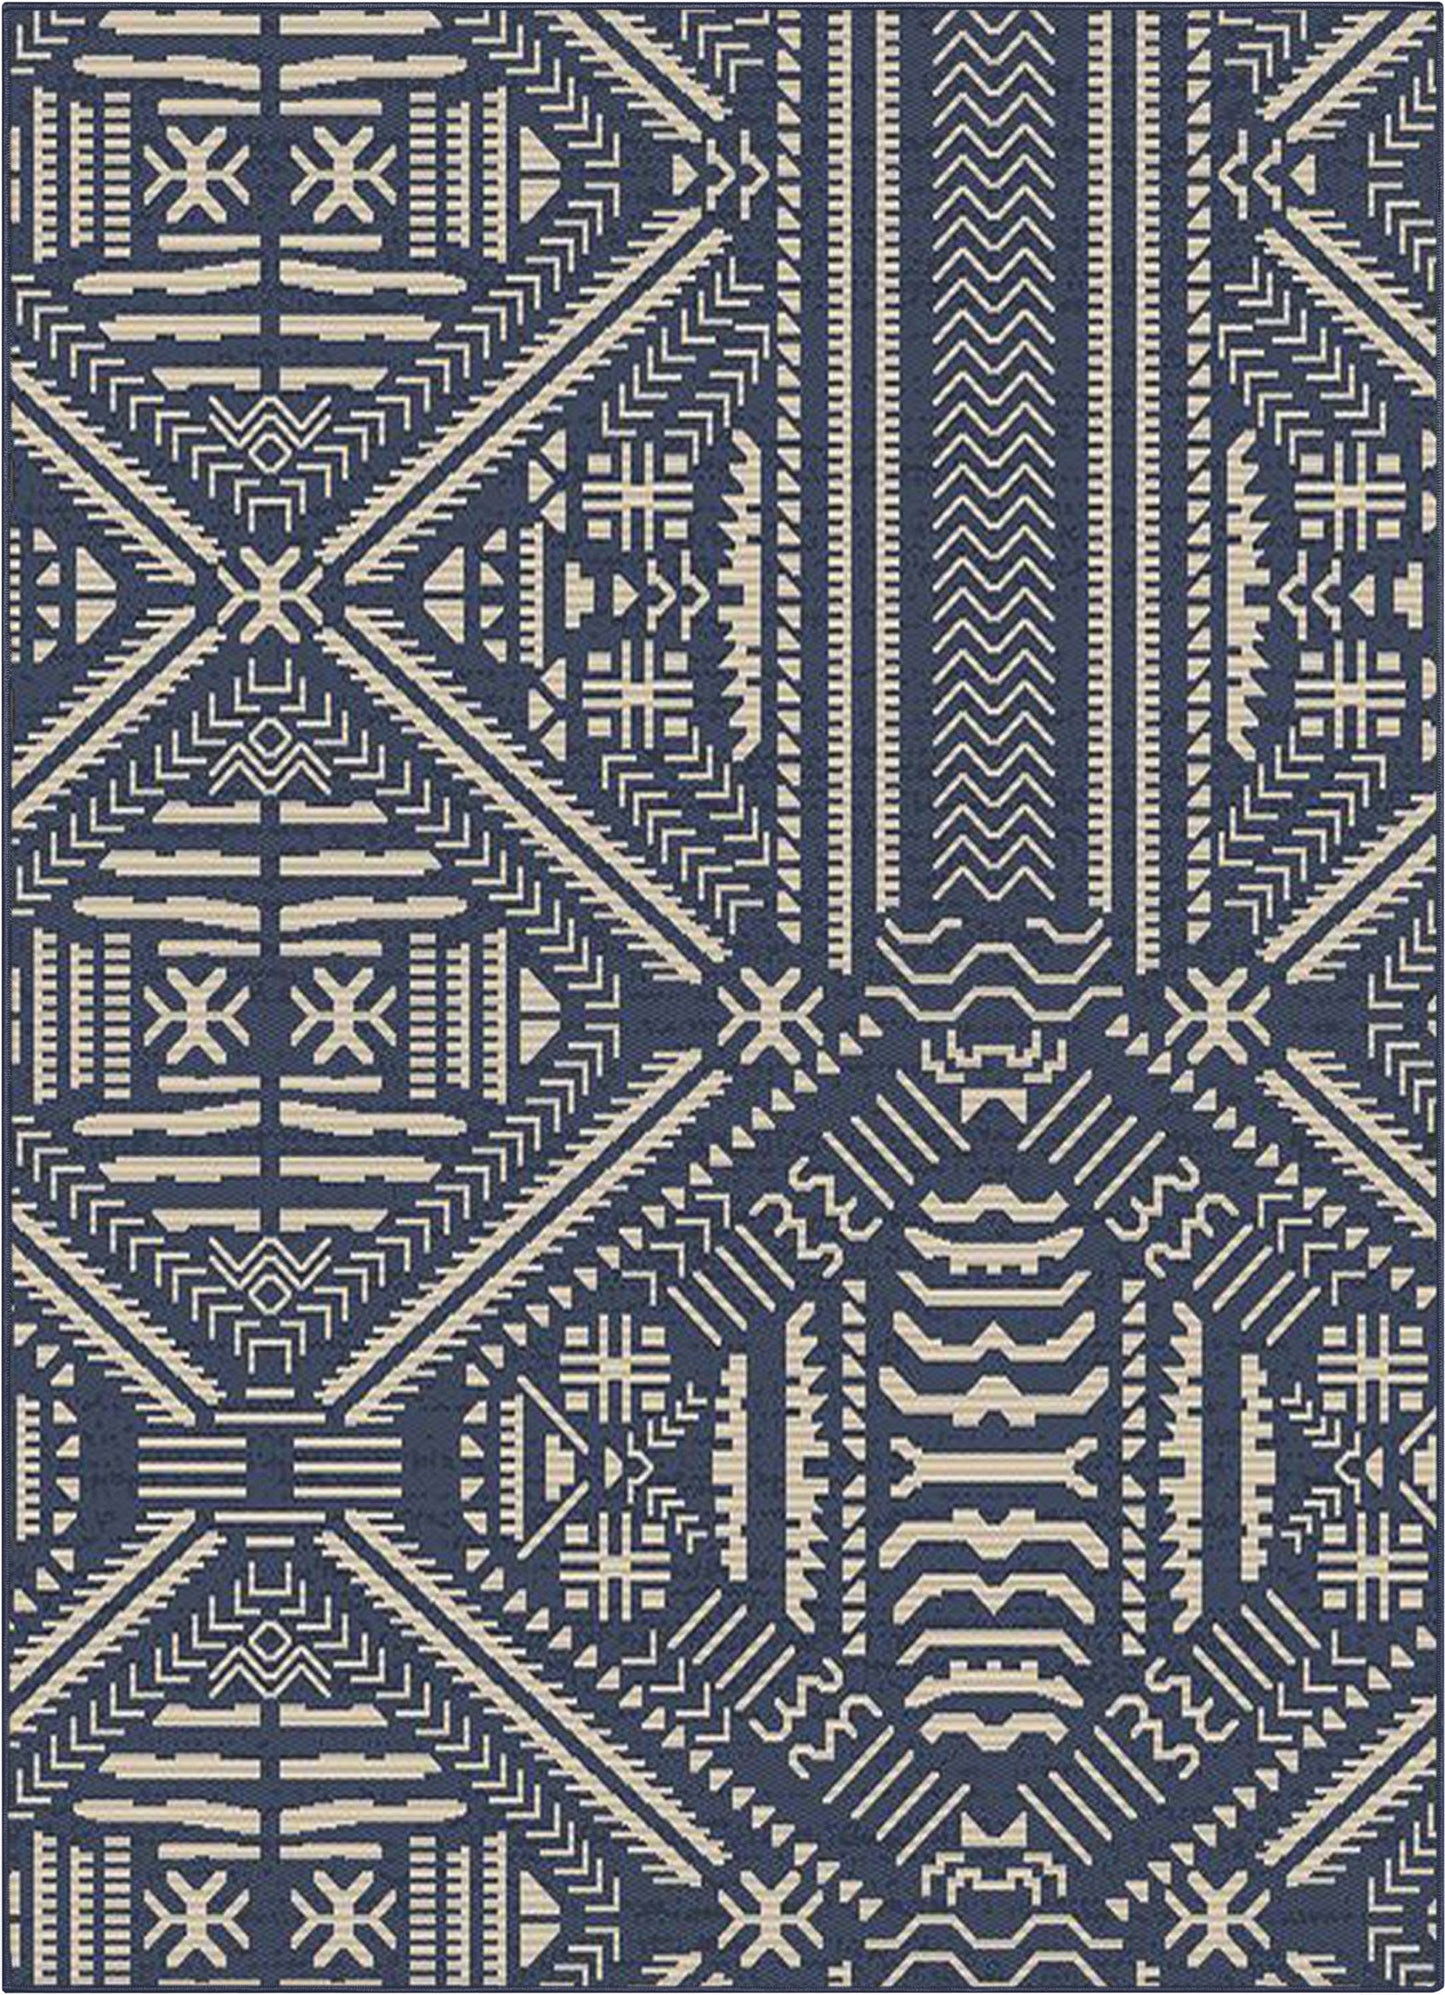 Khalo Tribal Indoor/Outdoor Navy Blue Flat-Weave Rug MED-224